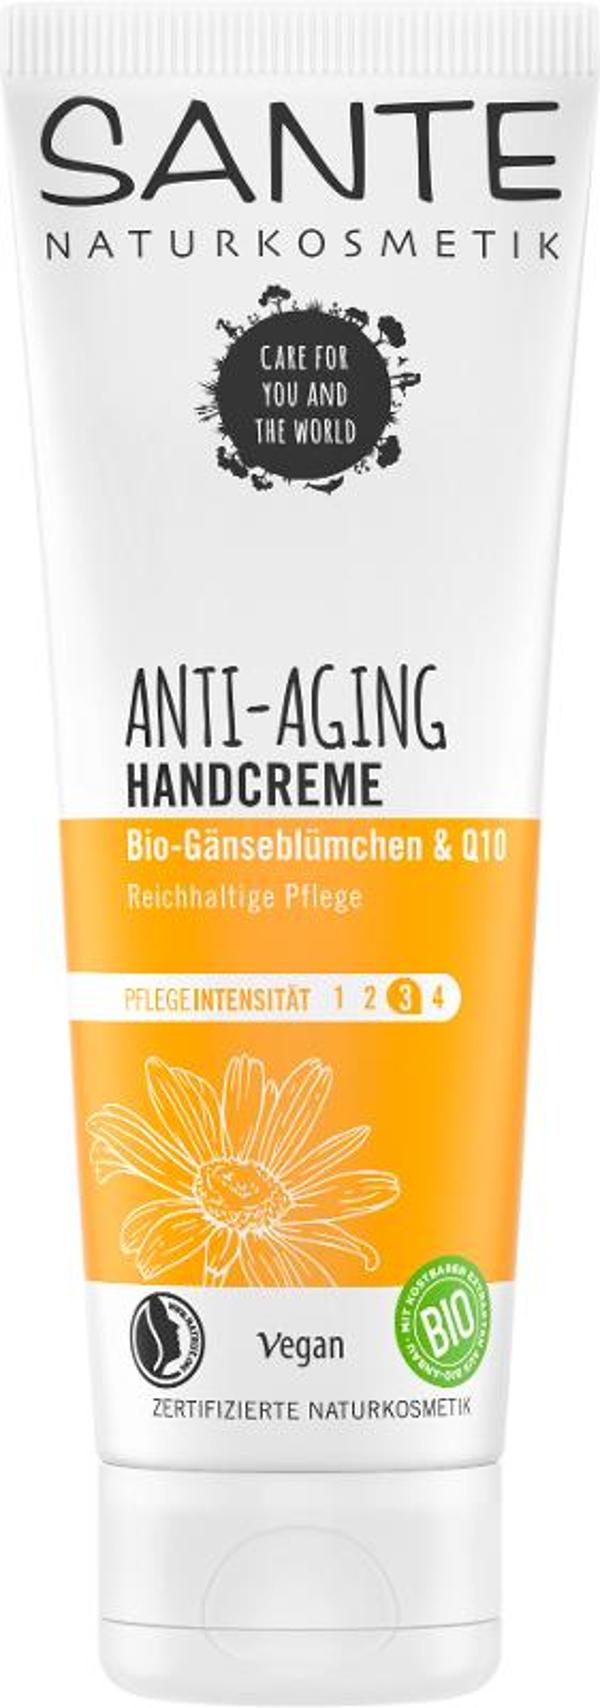 Produktfoto zu Anti Aging Handcreme, 75 ml